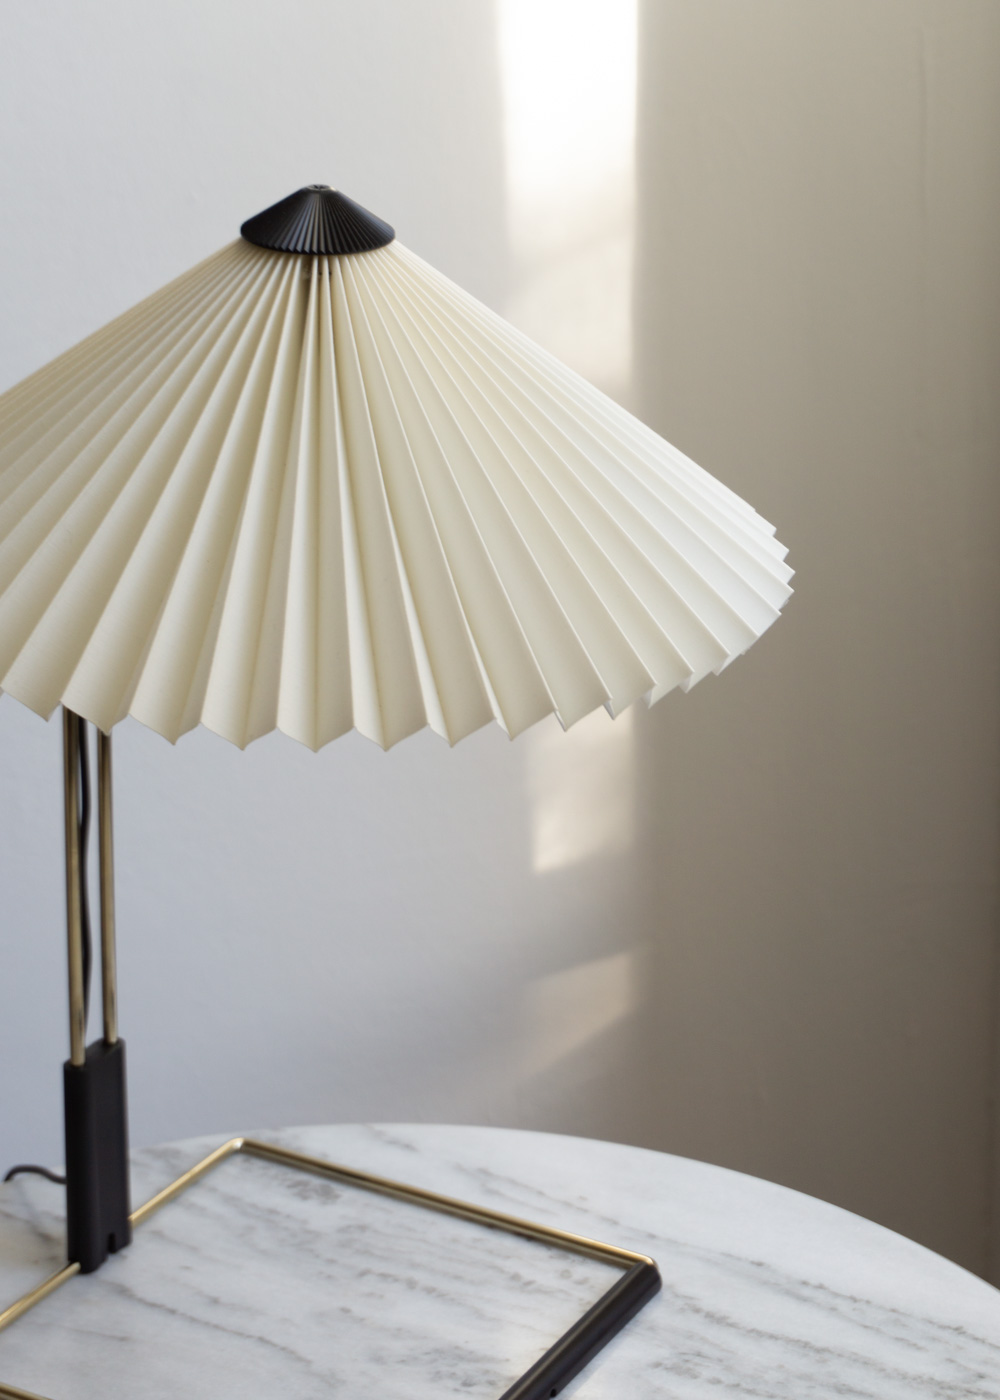 Hay Matin Lamp, Marble Table - - Neutral Home, Scandinavian Aesthetic, Berlin Apartment, White Interior, Calm Lighting | RG Daily Blog